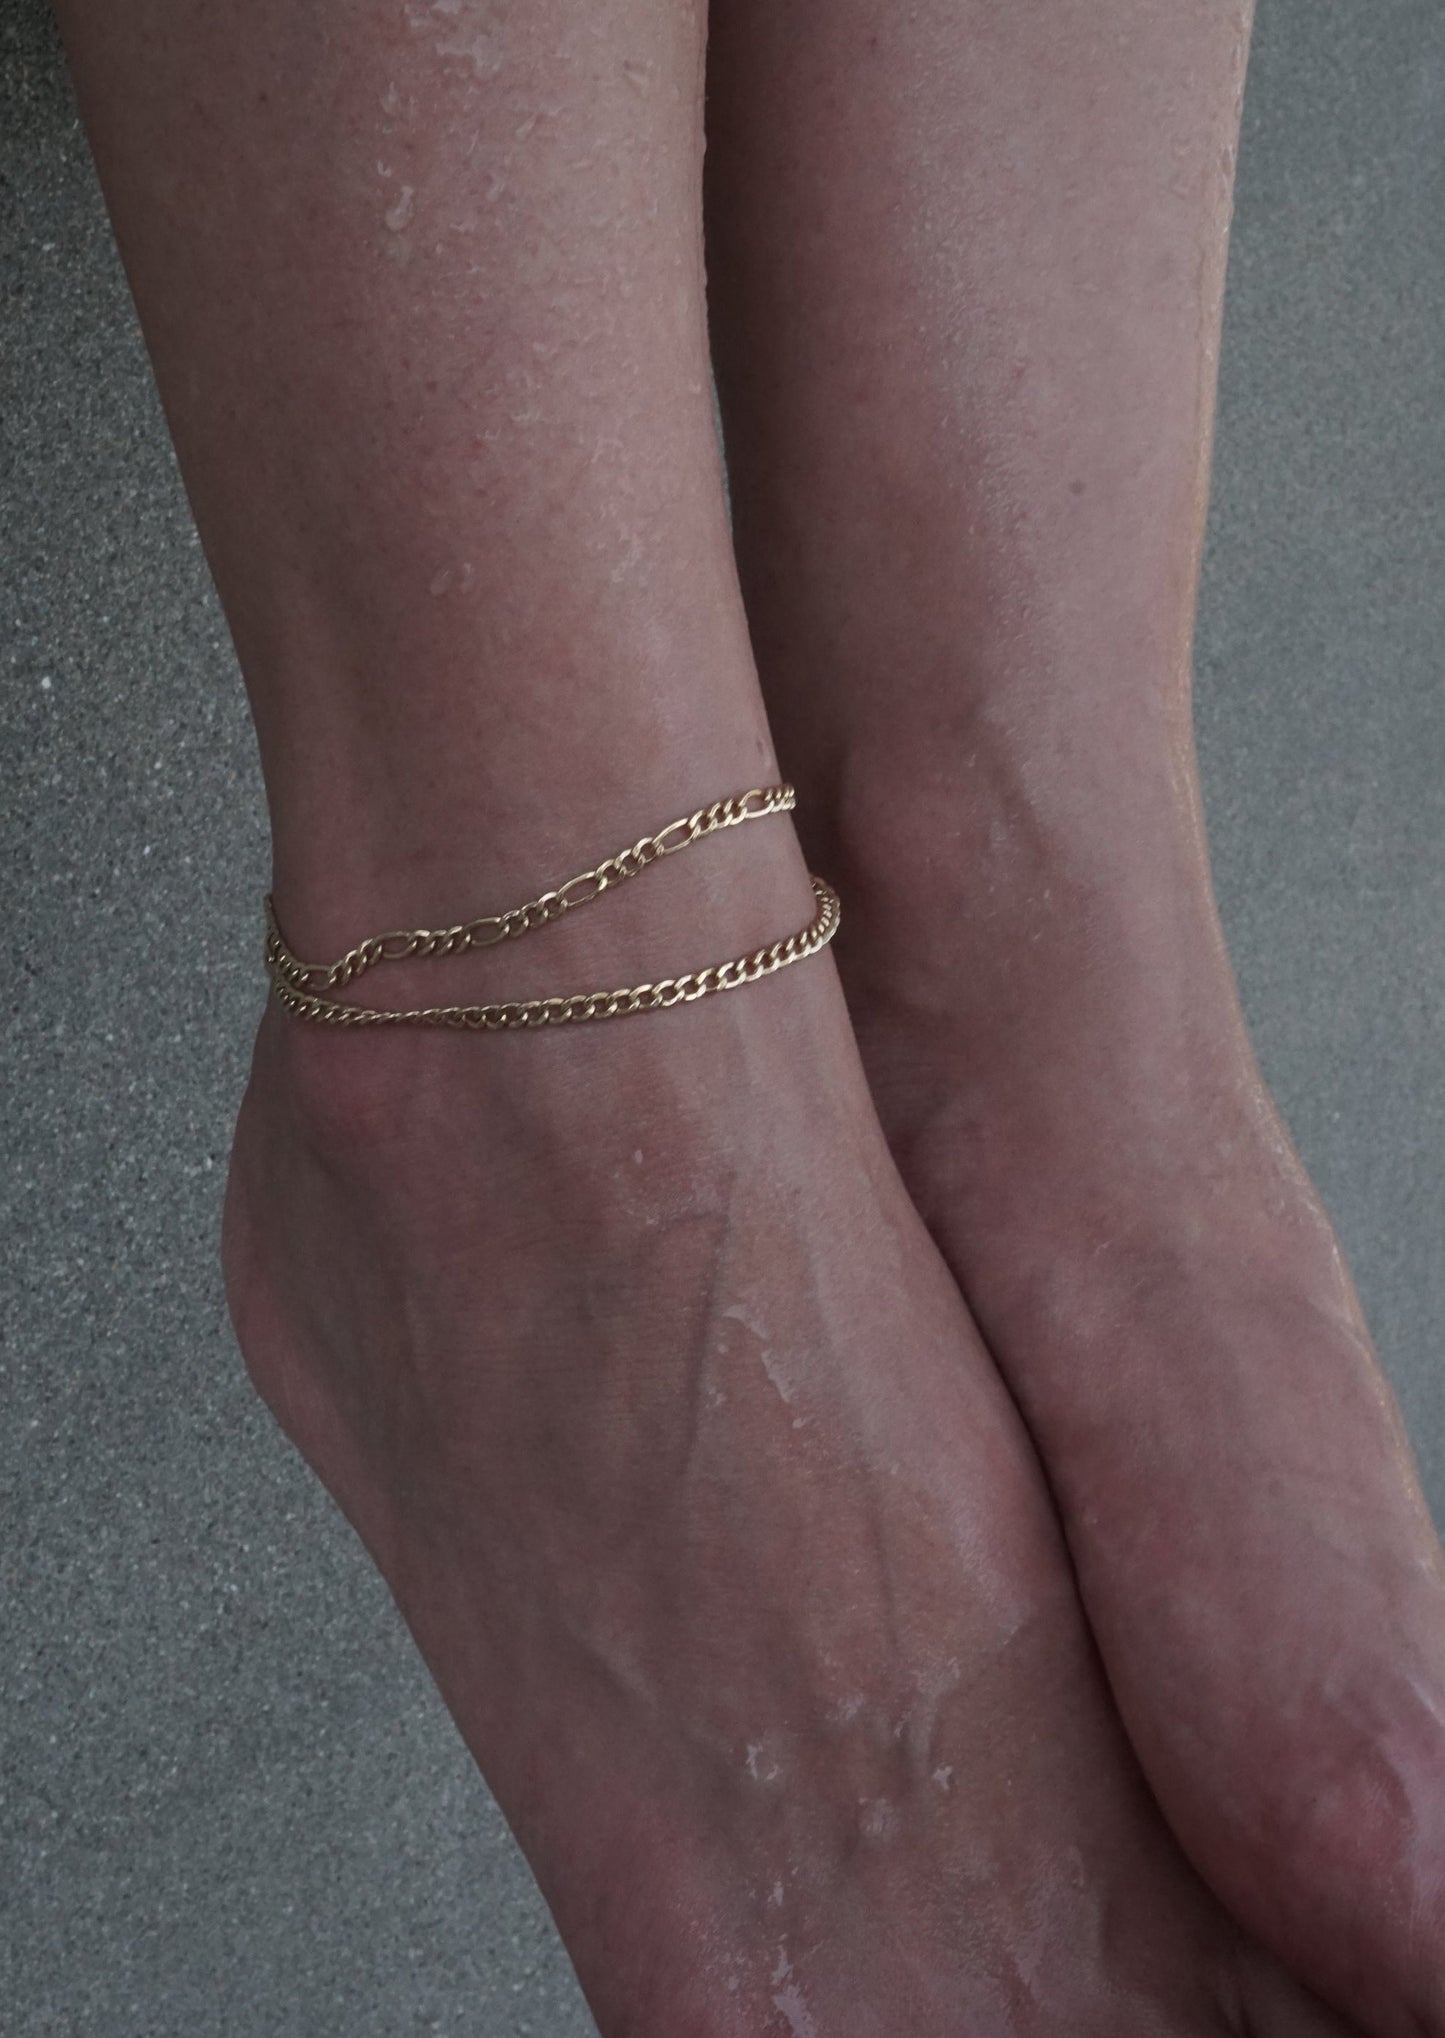 10k Gold Figaro Anklet